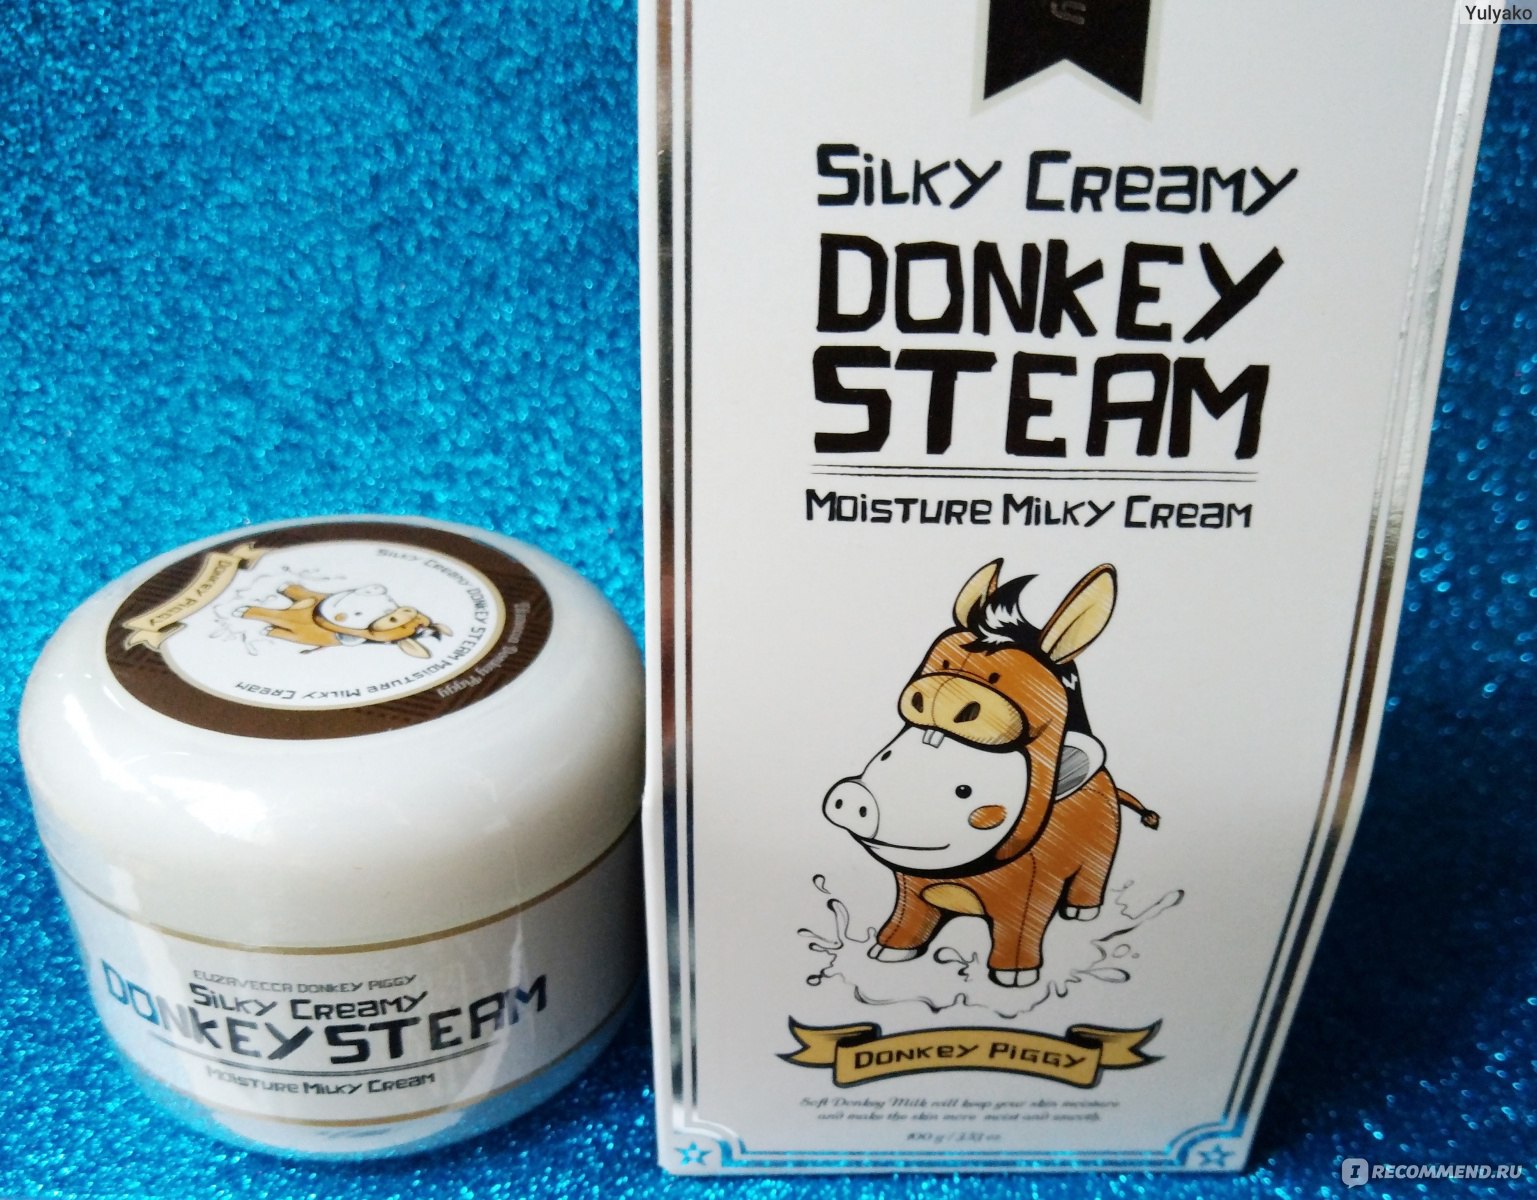 Silky cream donkey steam moisture milky cream фото 33